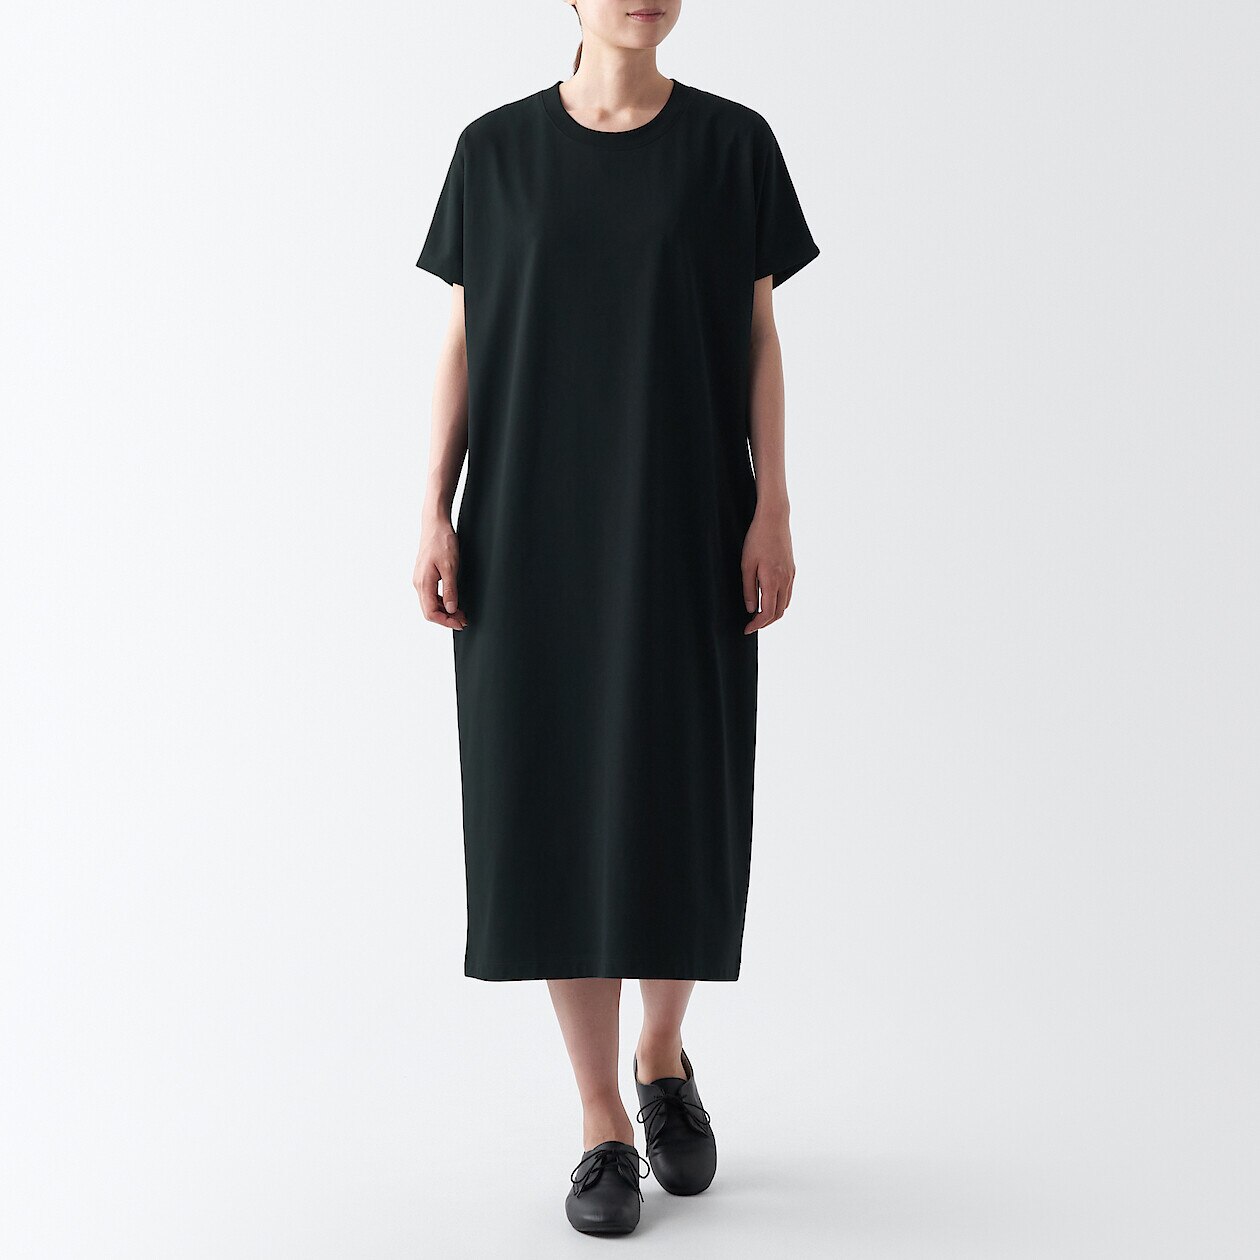 Shop Cool Touch Dress online | Muji UAE